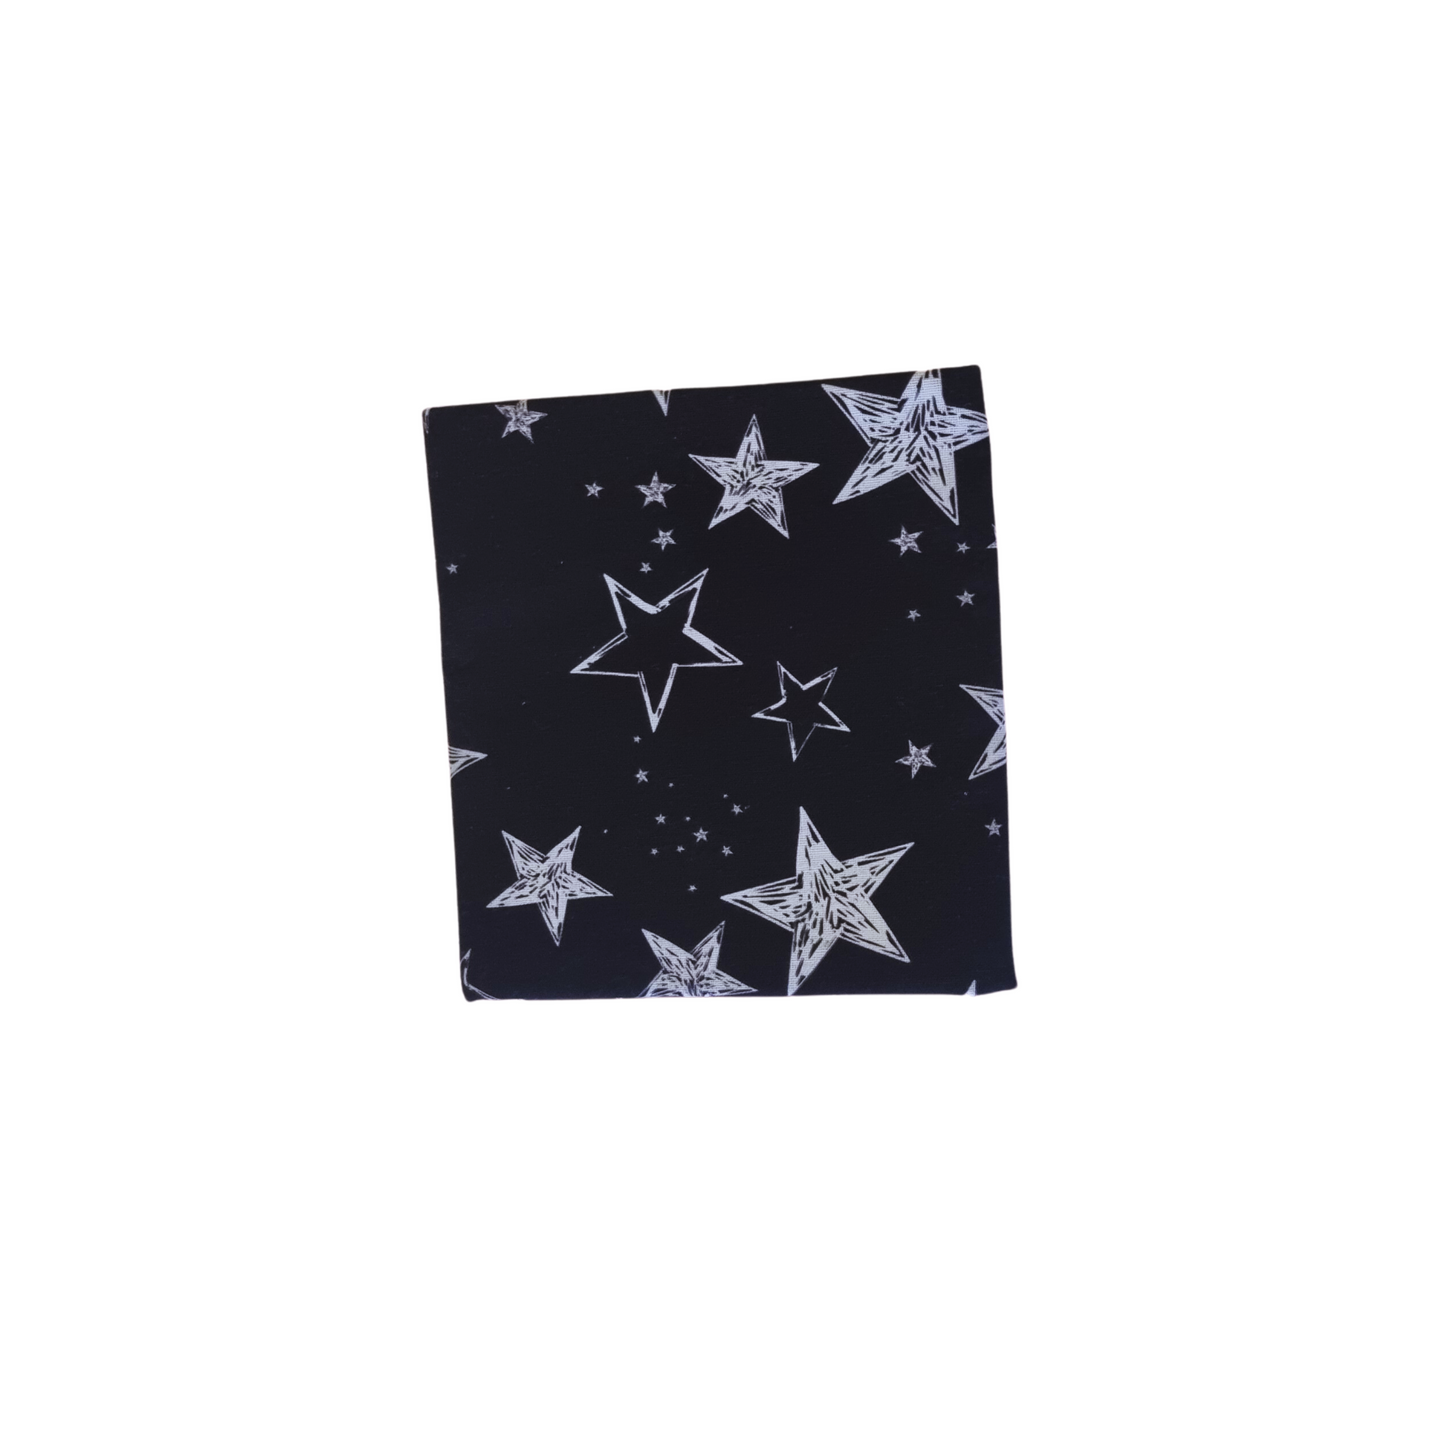 50 cm x 55 cm | Black Star Cotton | Craft Cotton Co